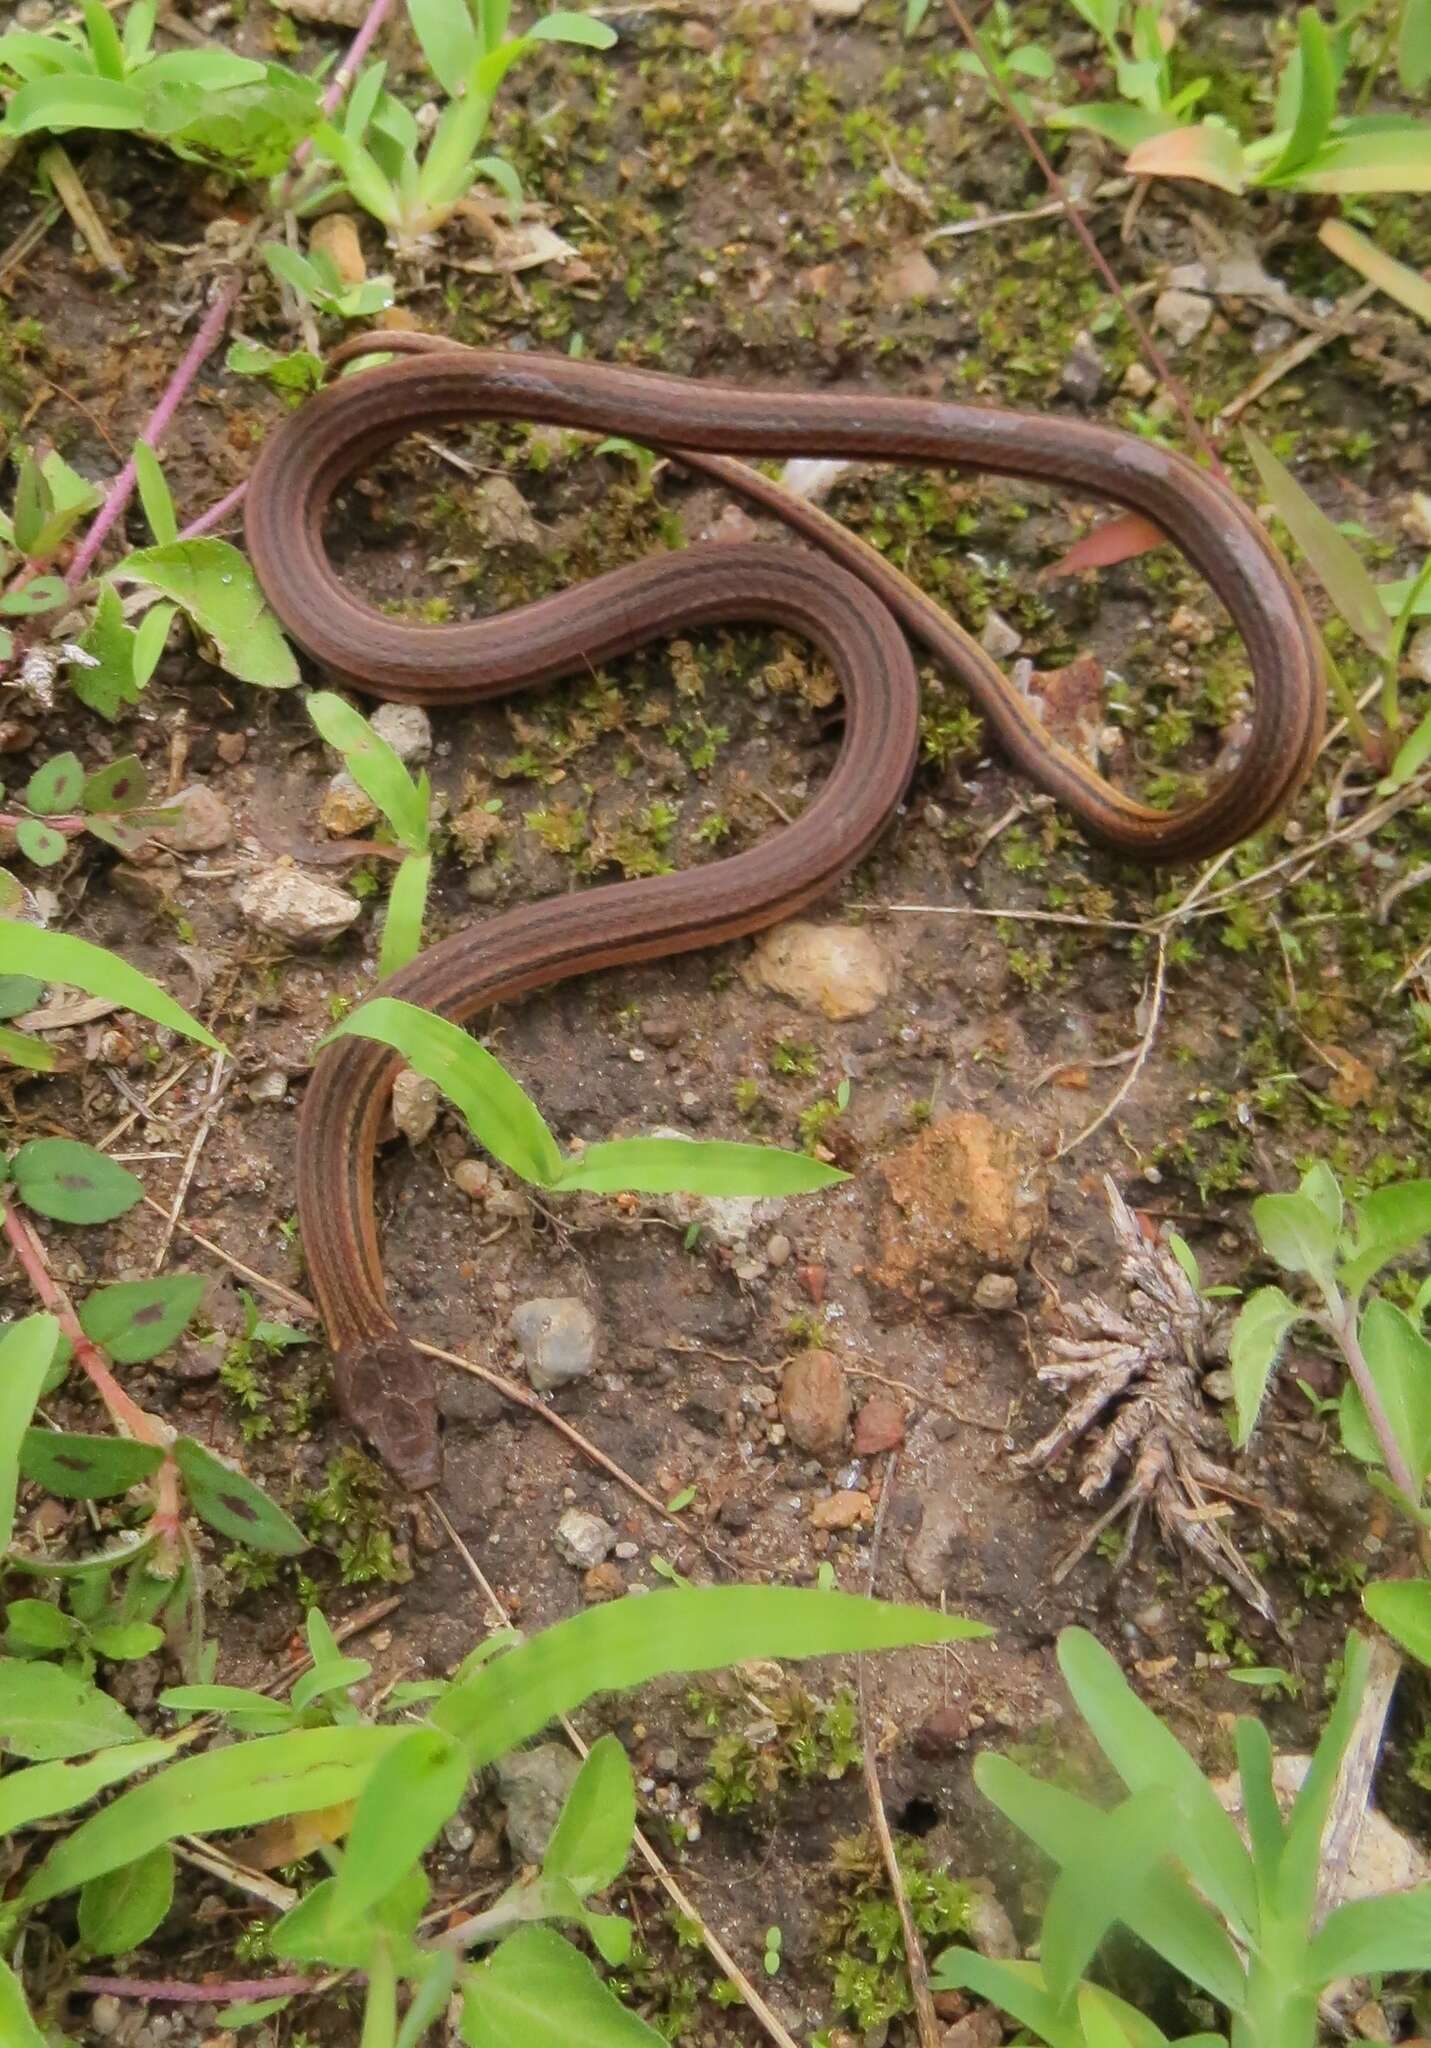 Image of Godman's Graceful Brown Snake